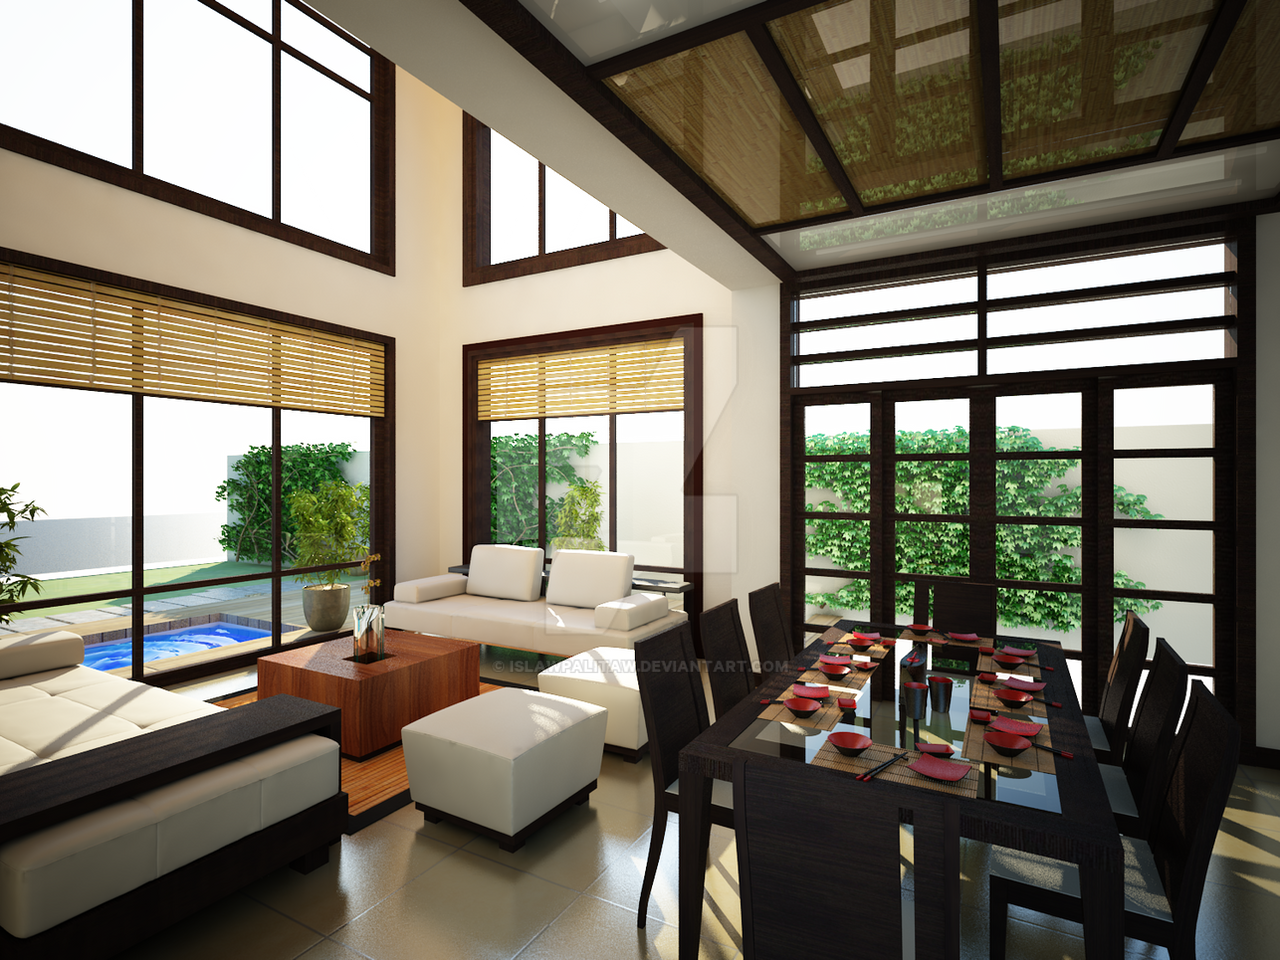 Japanese Inspired Living Room by islawpalitaw on DeviantArt